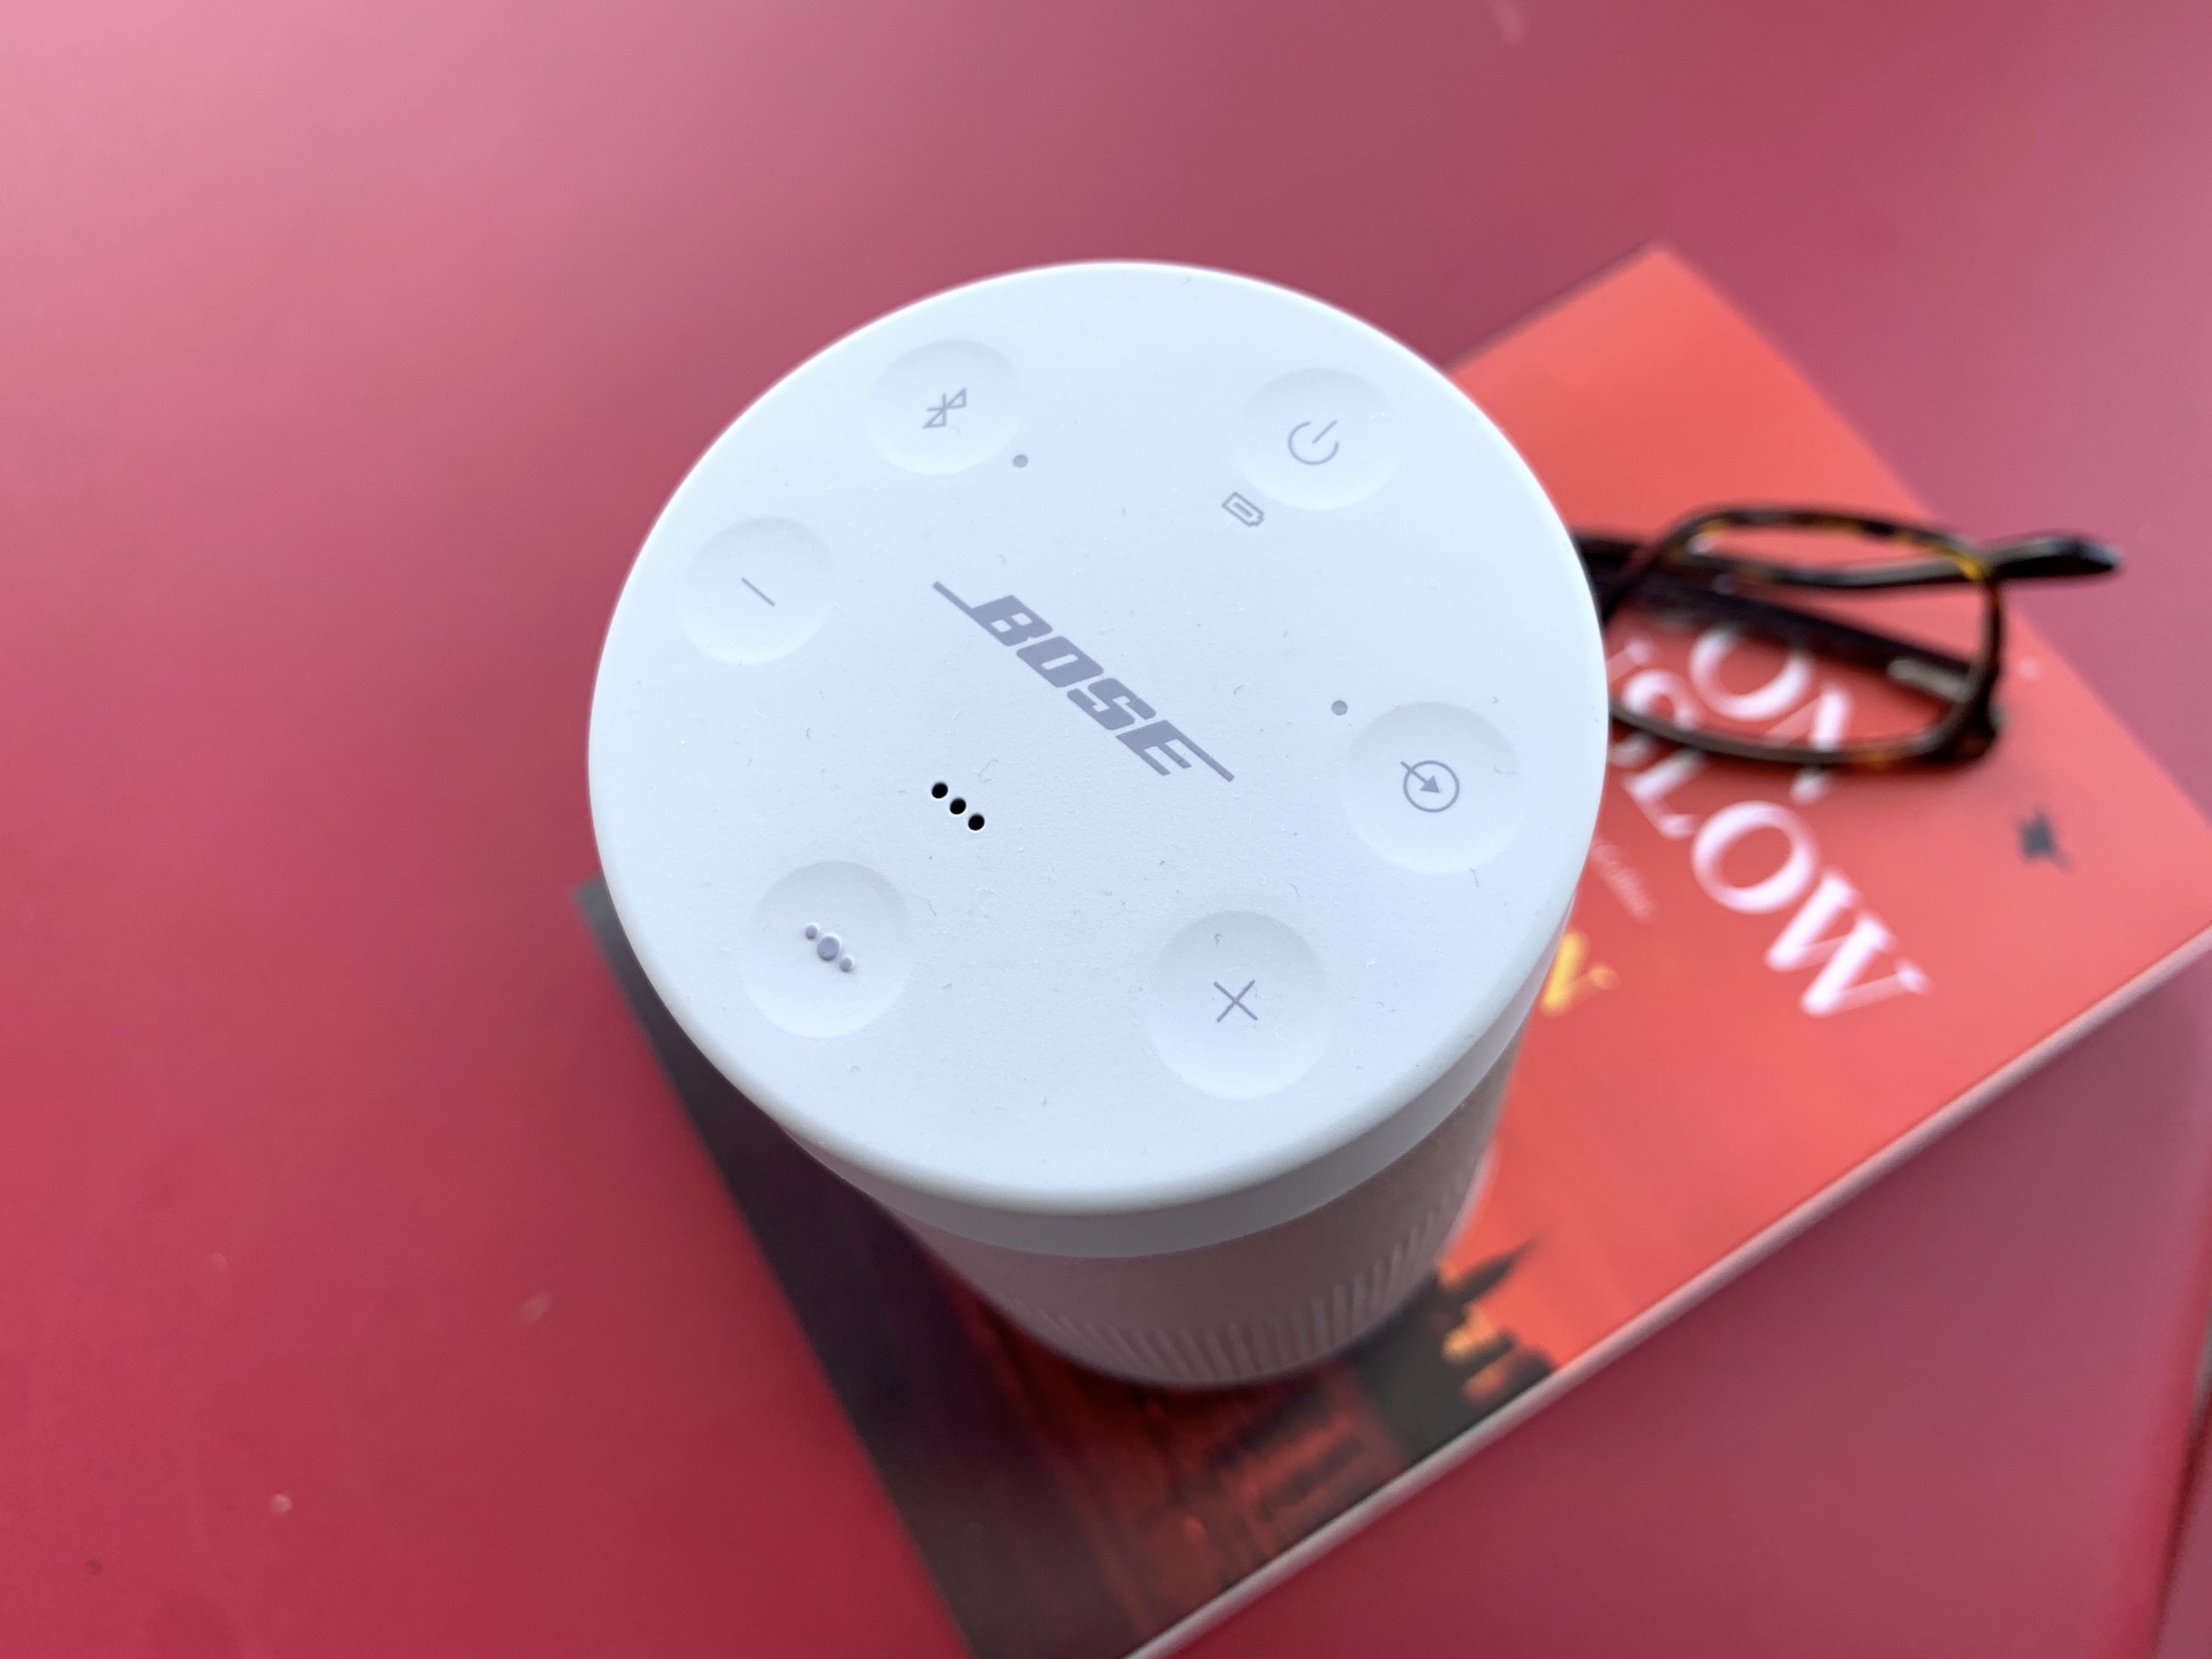 
                                    
                                Bose SoundLink Revolve, l'altoparlante wireless da portarsi in ogni luogo